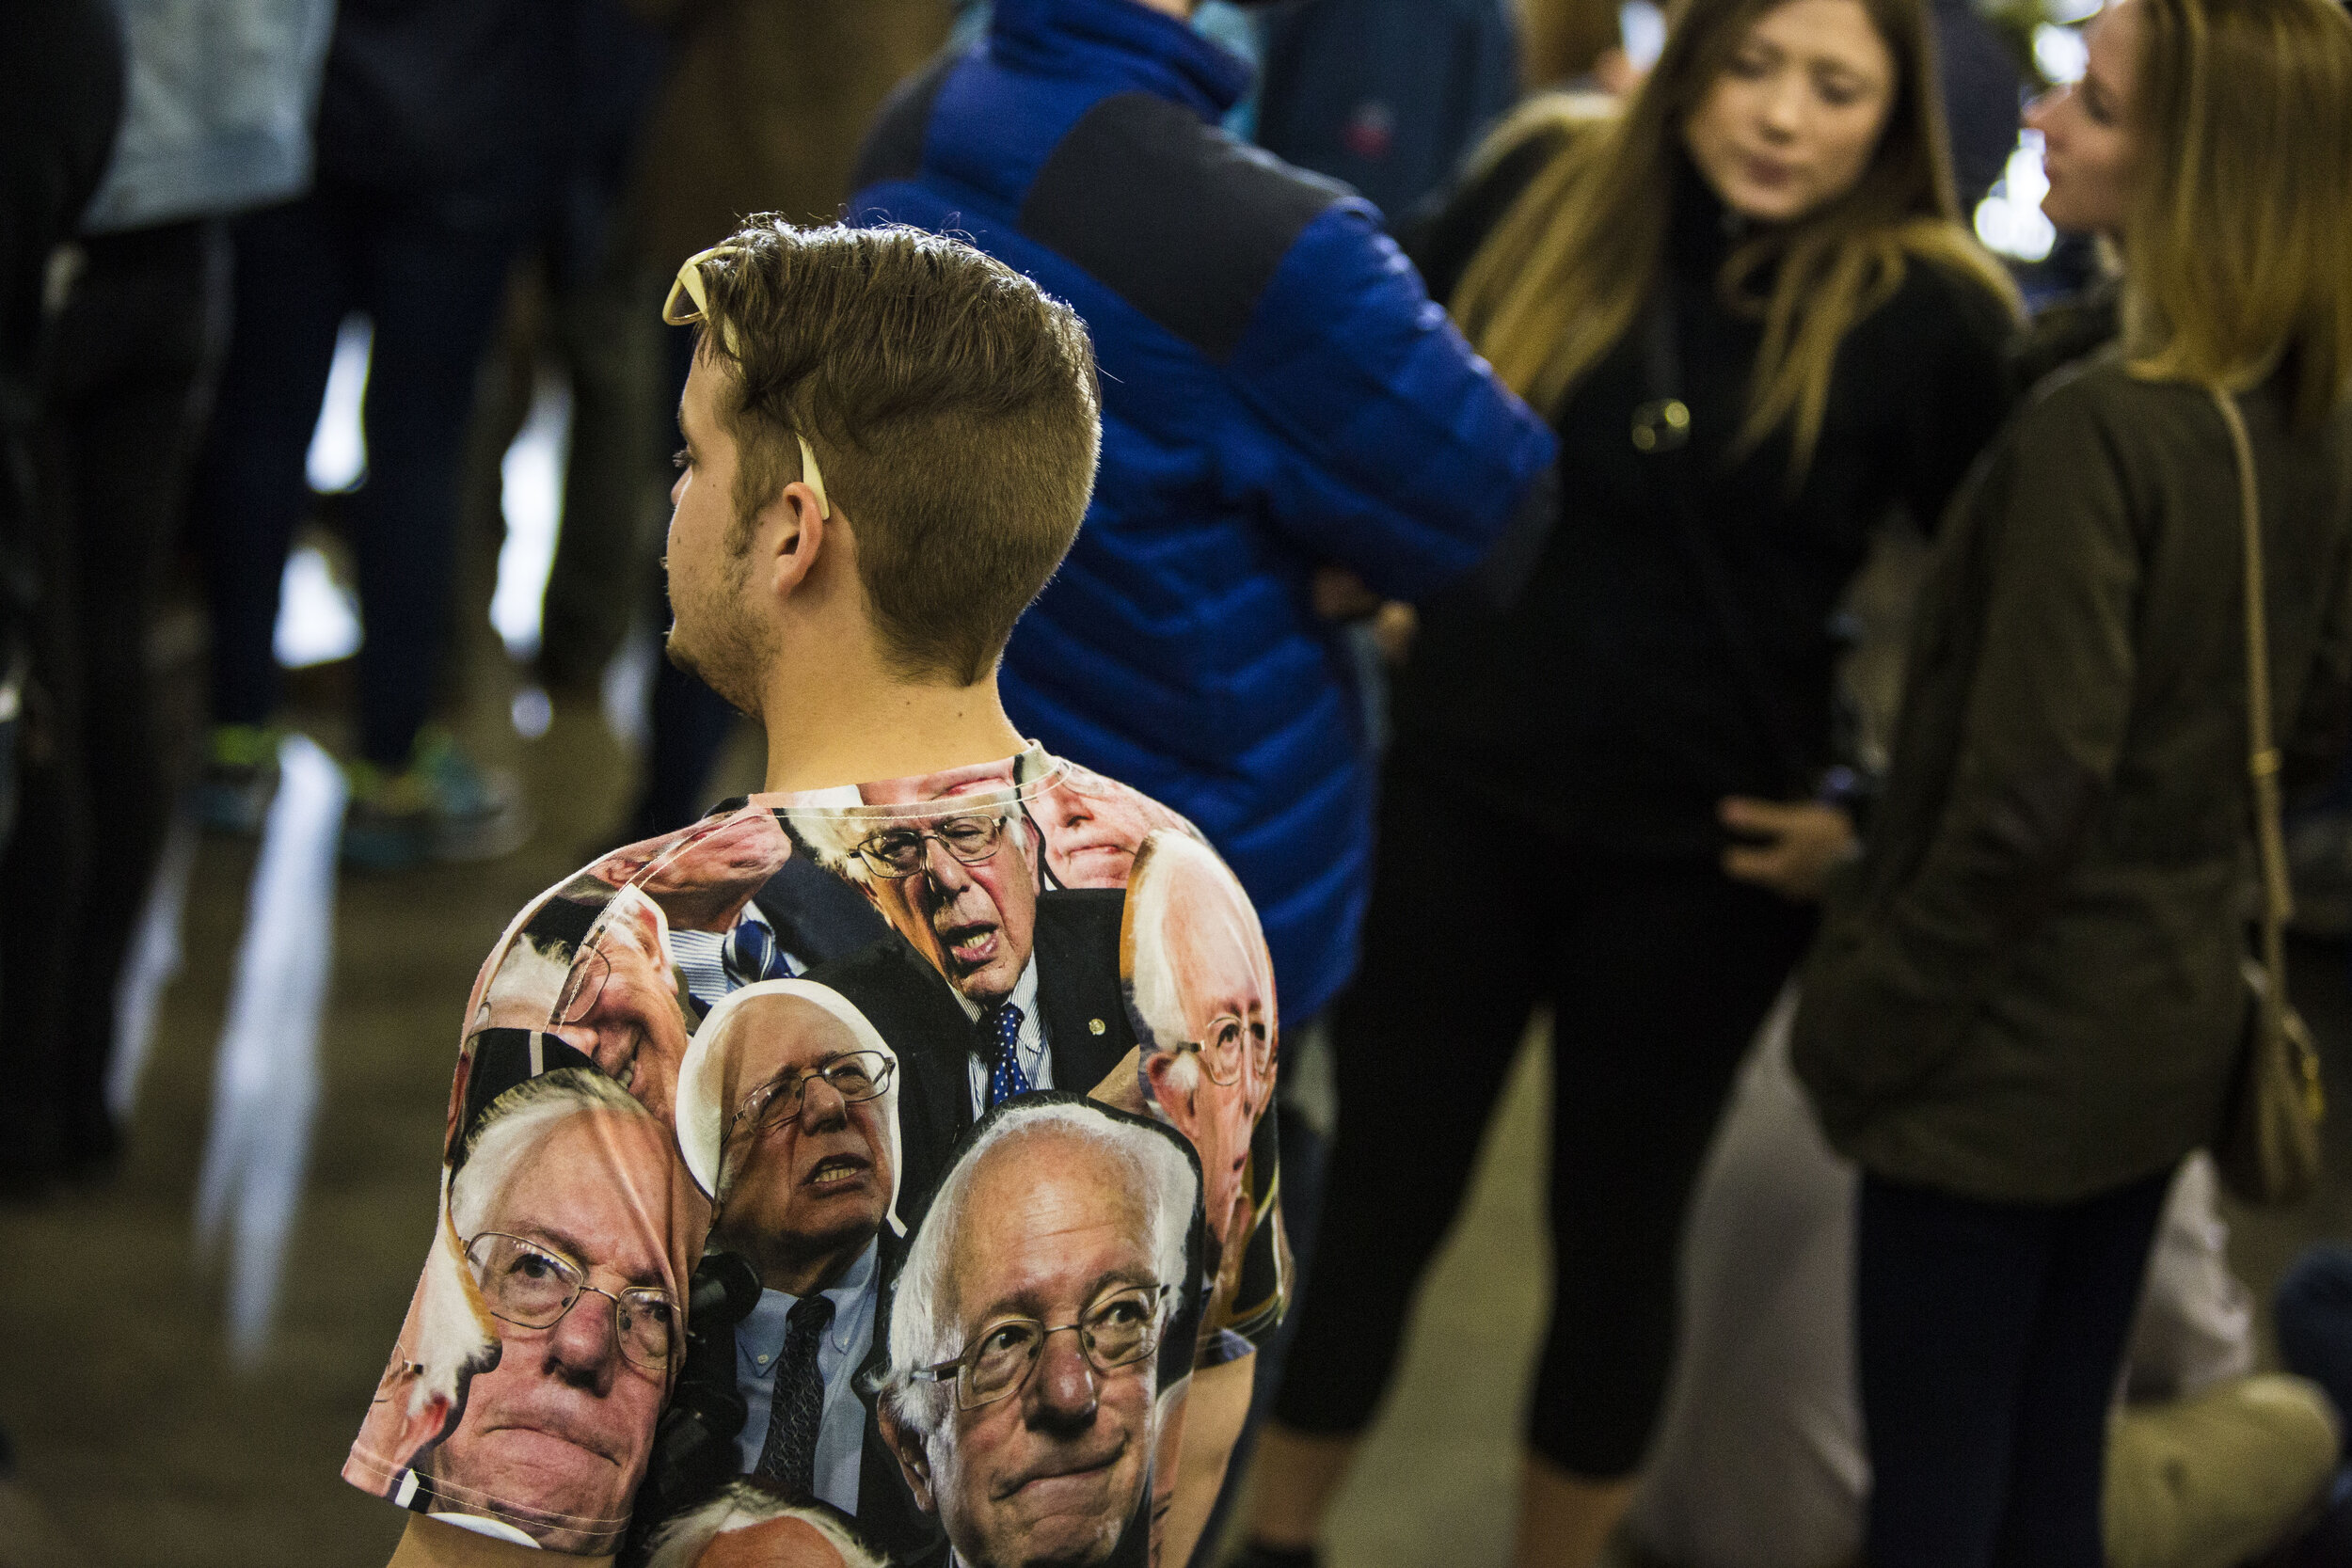  Todd Bass, a Bernie Sanders supporter wears a Sander's shirt at a rally. 